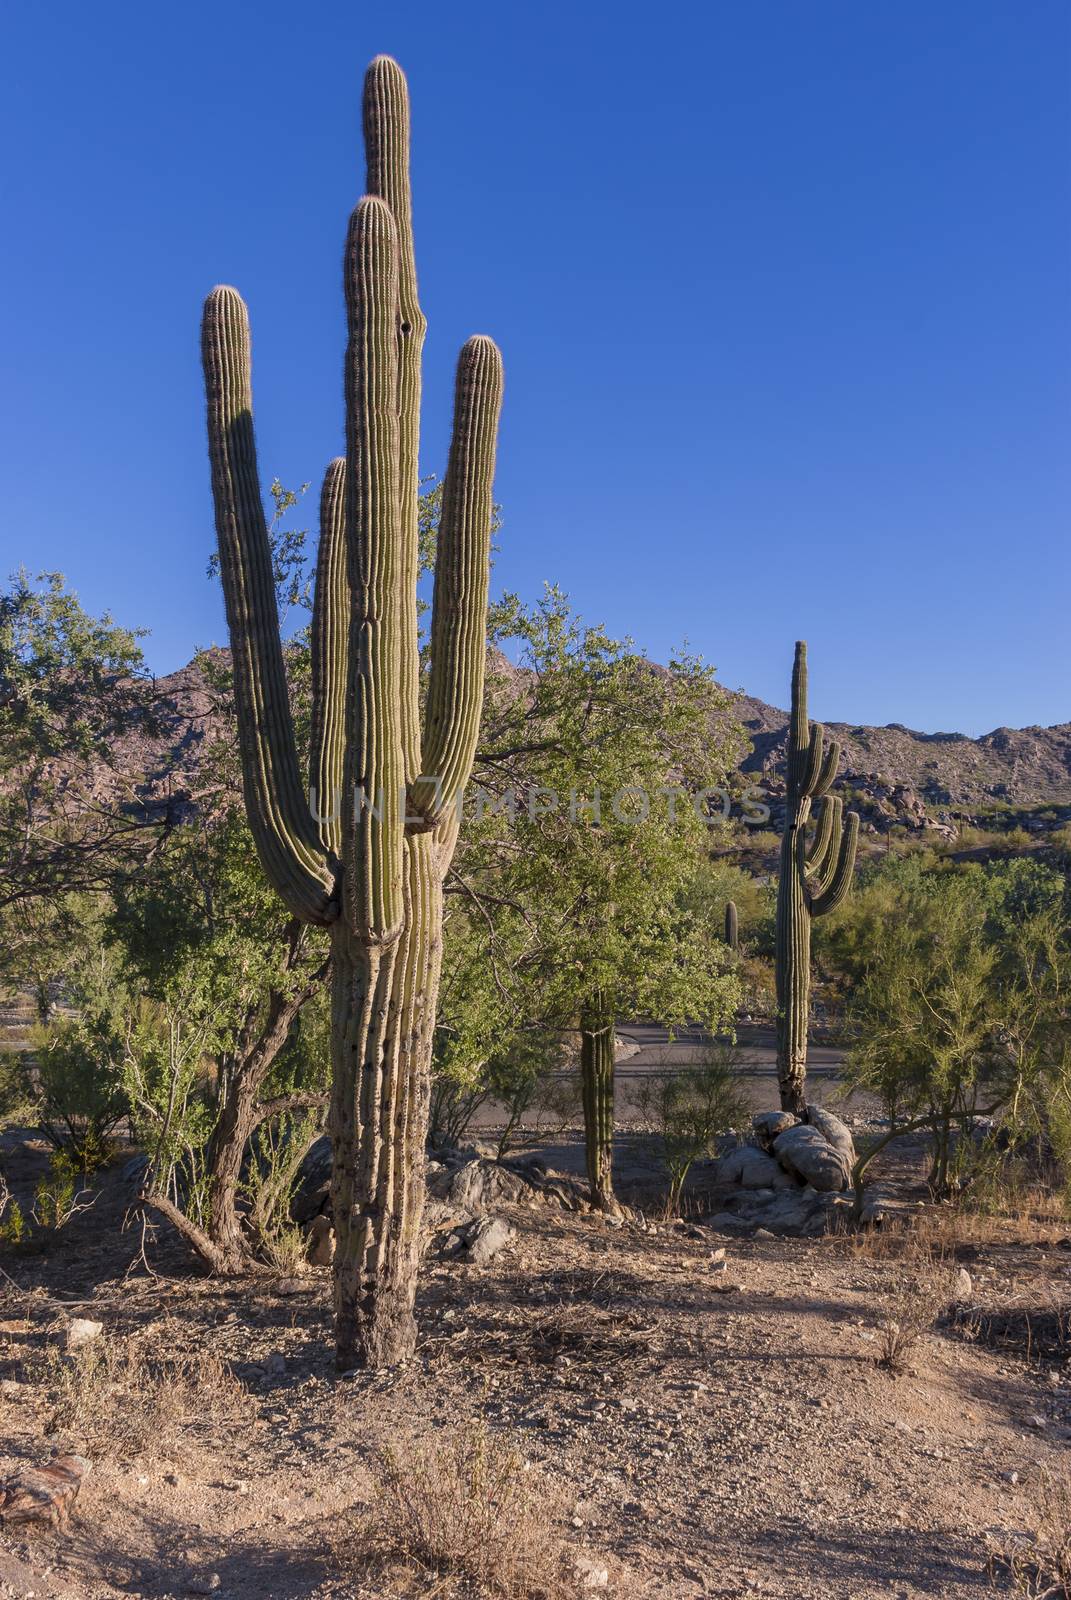 Saguaro cactus, very common giant cactus in Arizona, USA.